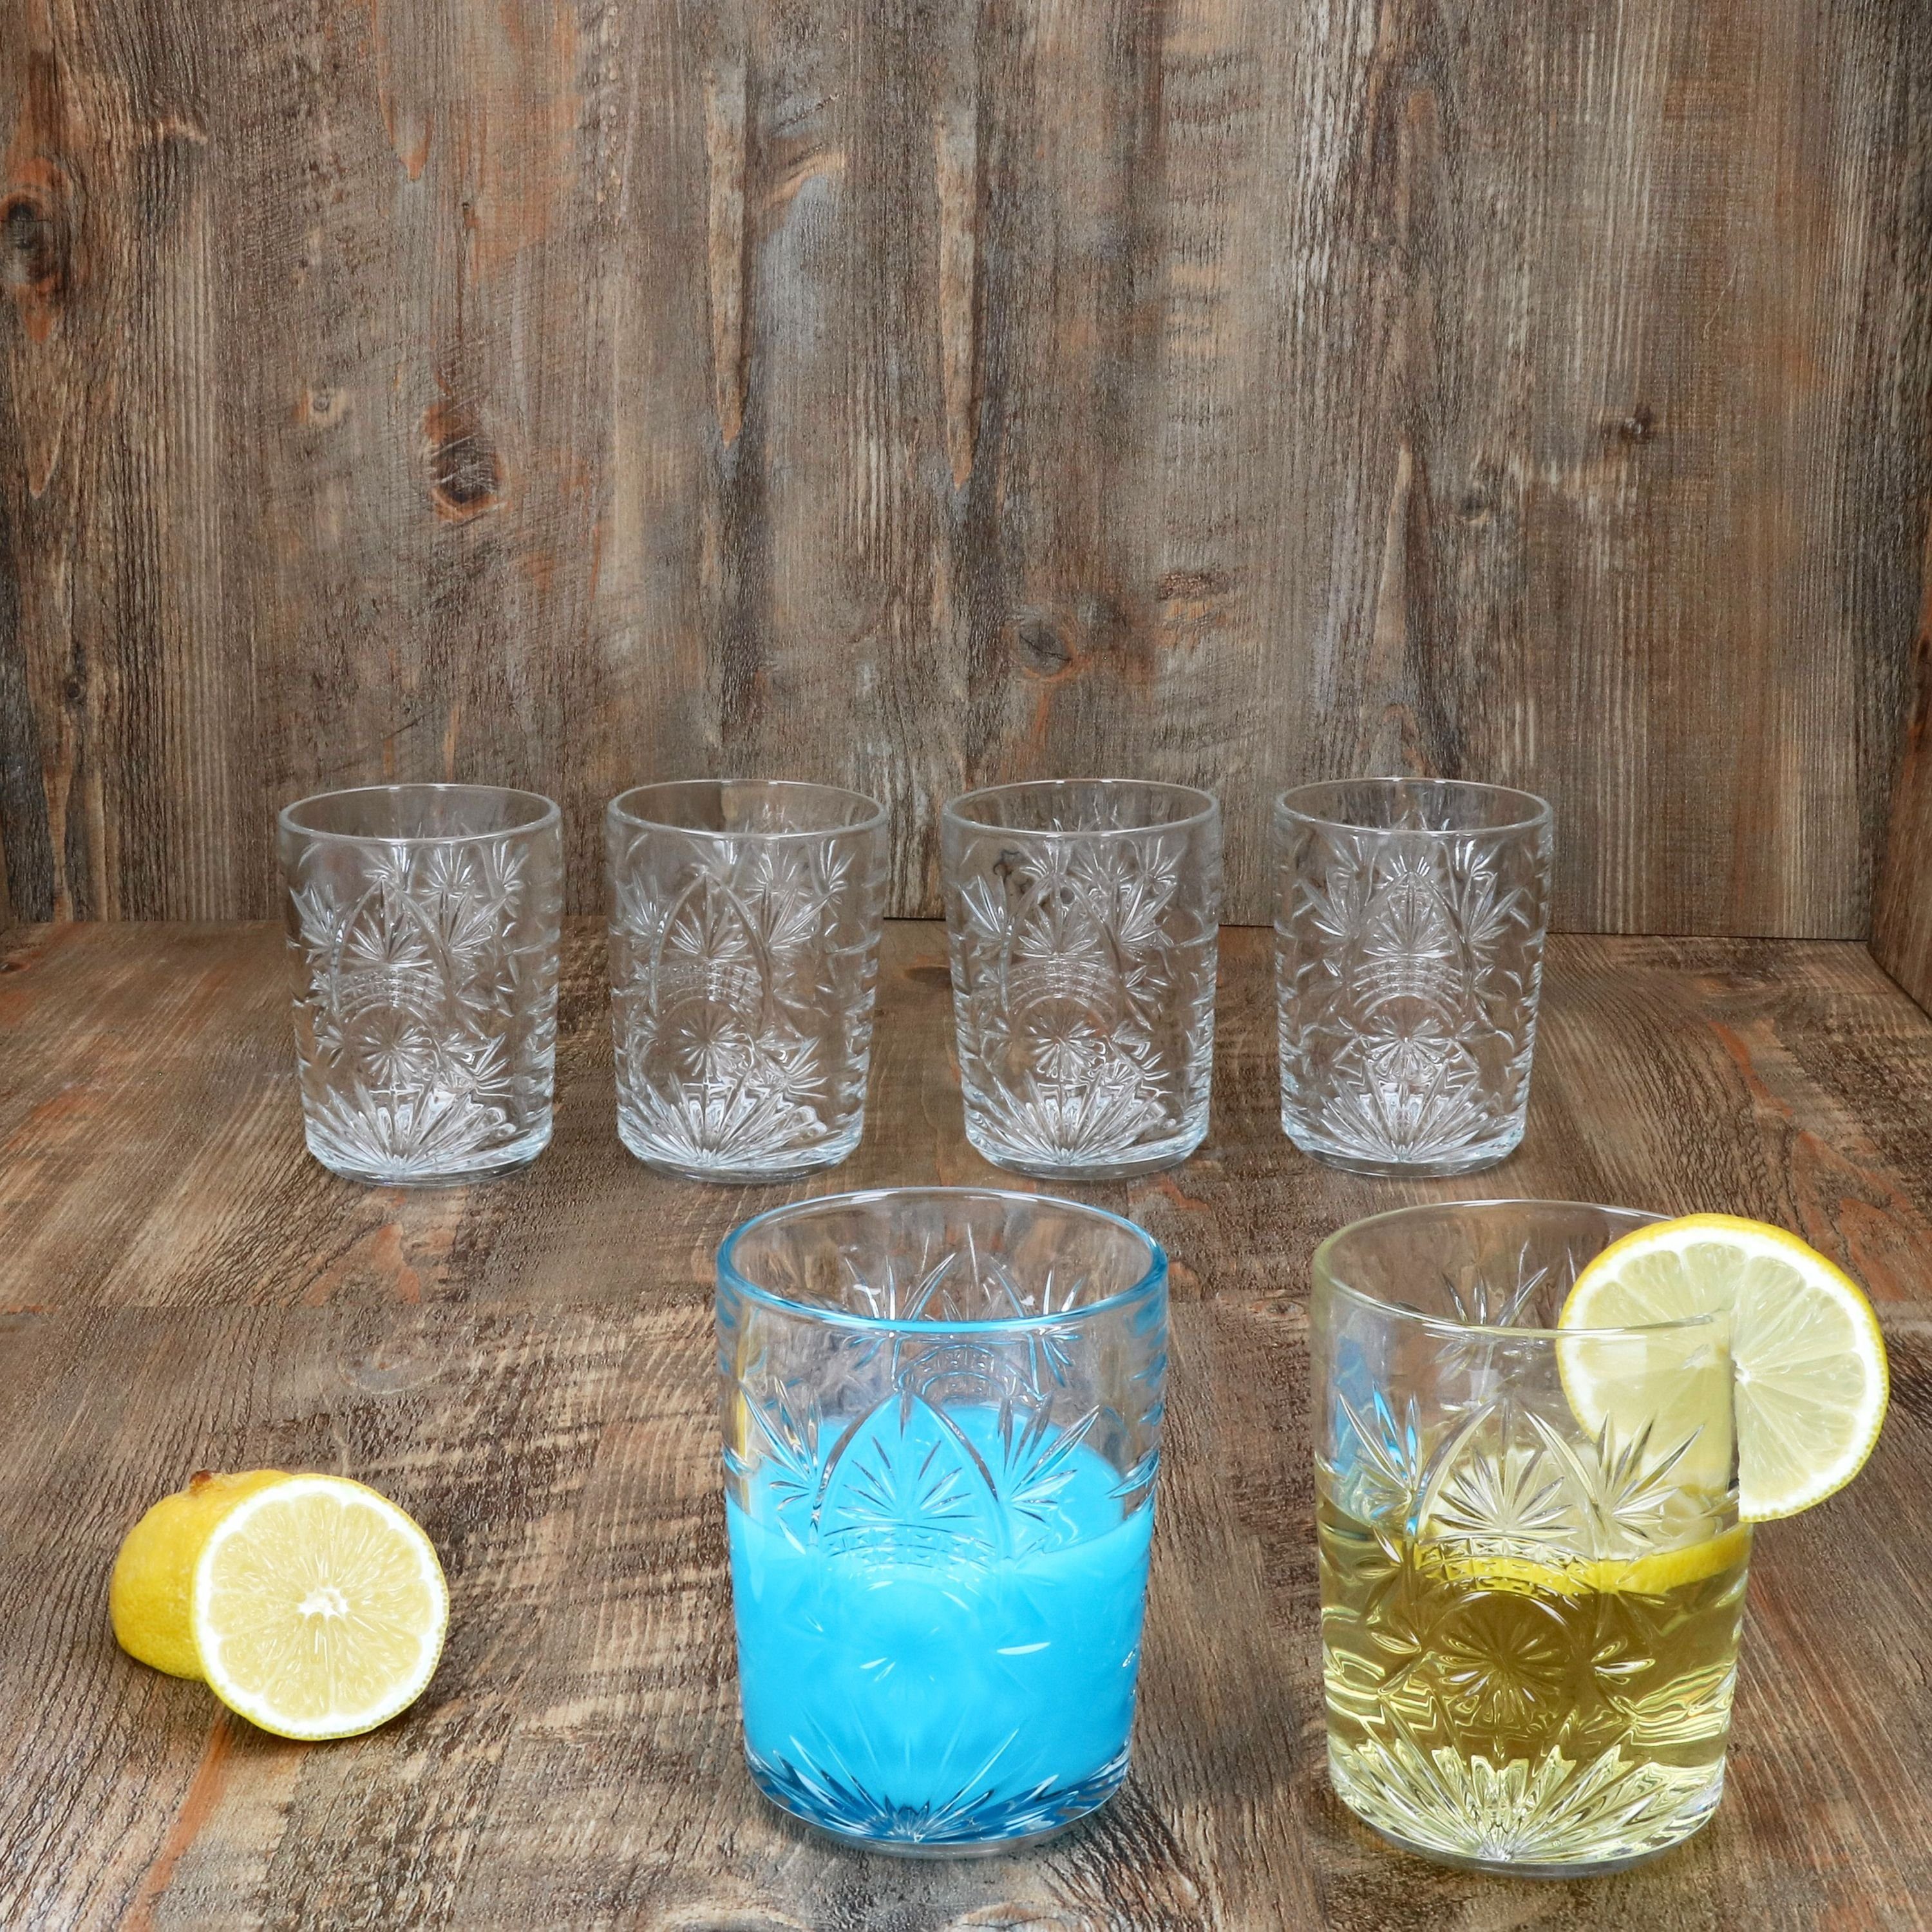 6x Glas Starla Wasser, Whisky-Tumbler Glas Relief Cocktailglas MamboCat transparent 280ml